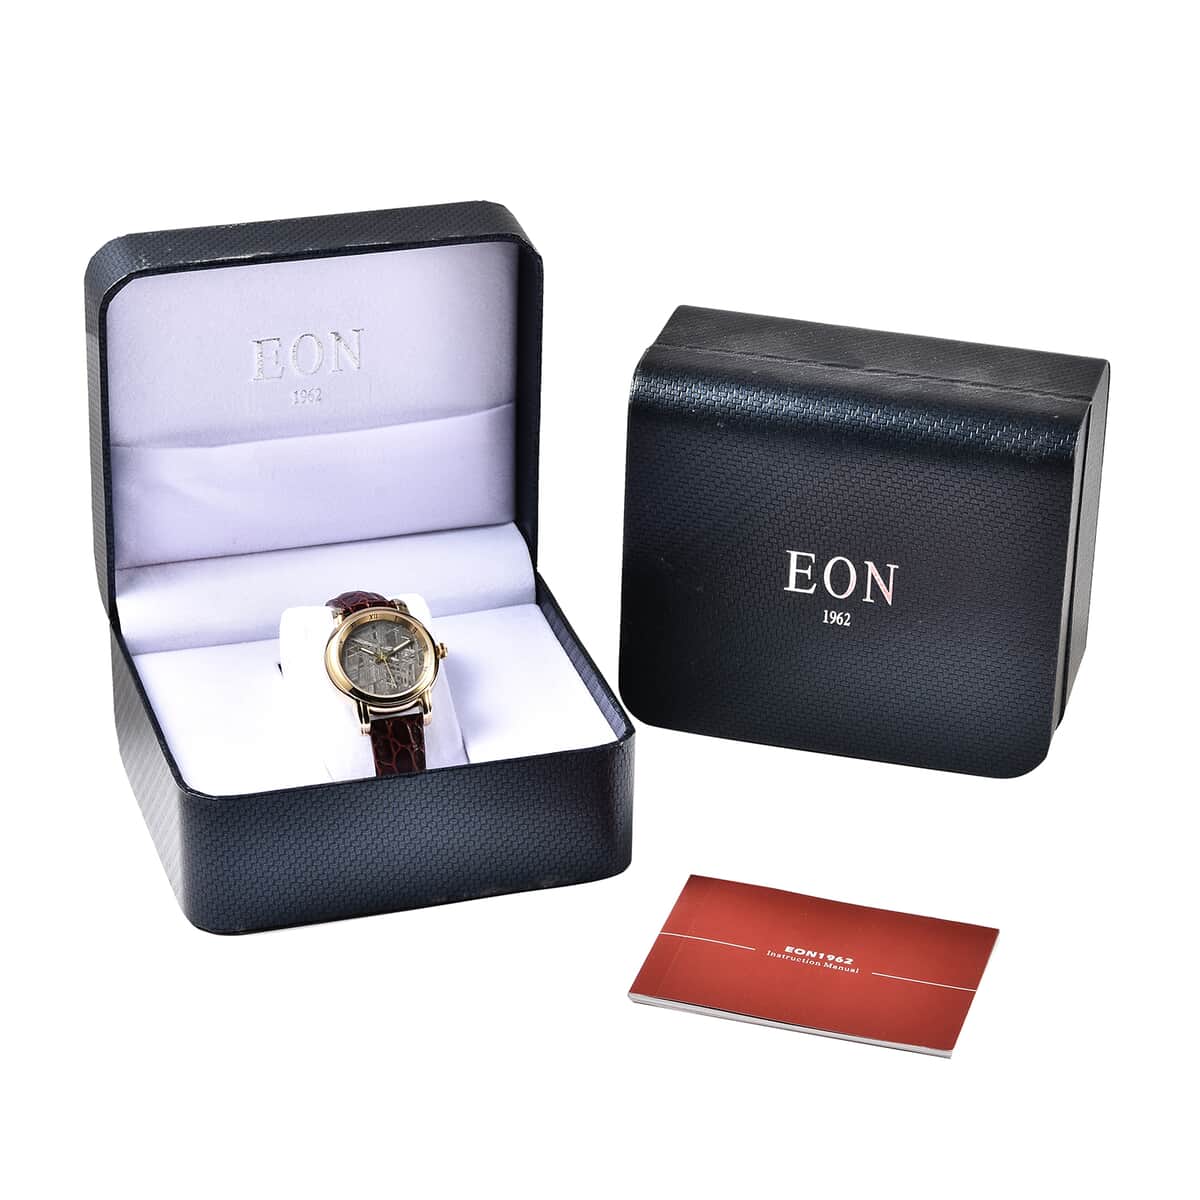 Eon 1962 Swiss Movement Watch with Marvelous Meteorite Dial & Dark Brown Leather Strap, Designer Gemstone Watch, Analog Luxury Wristwatch image number 6